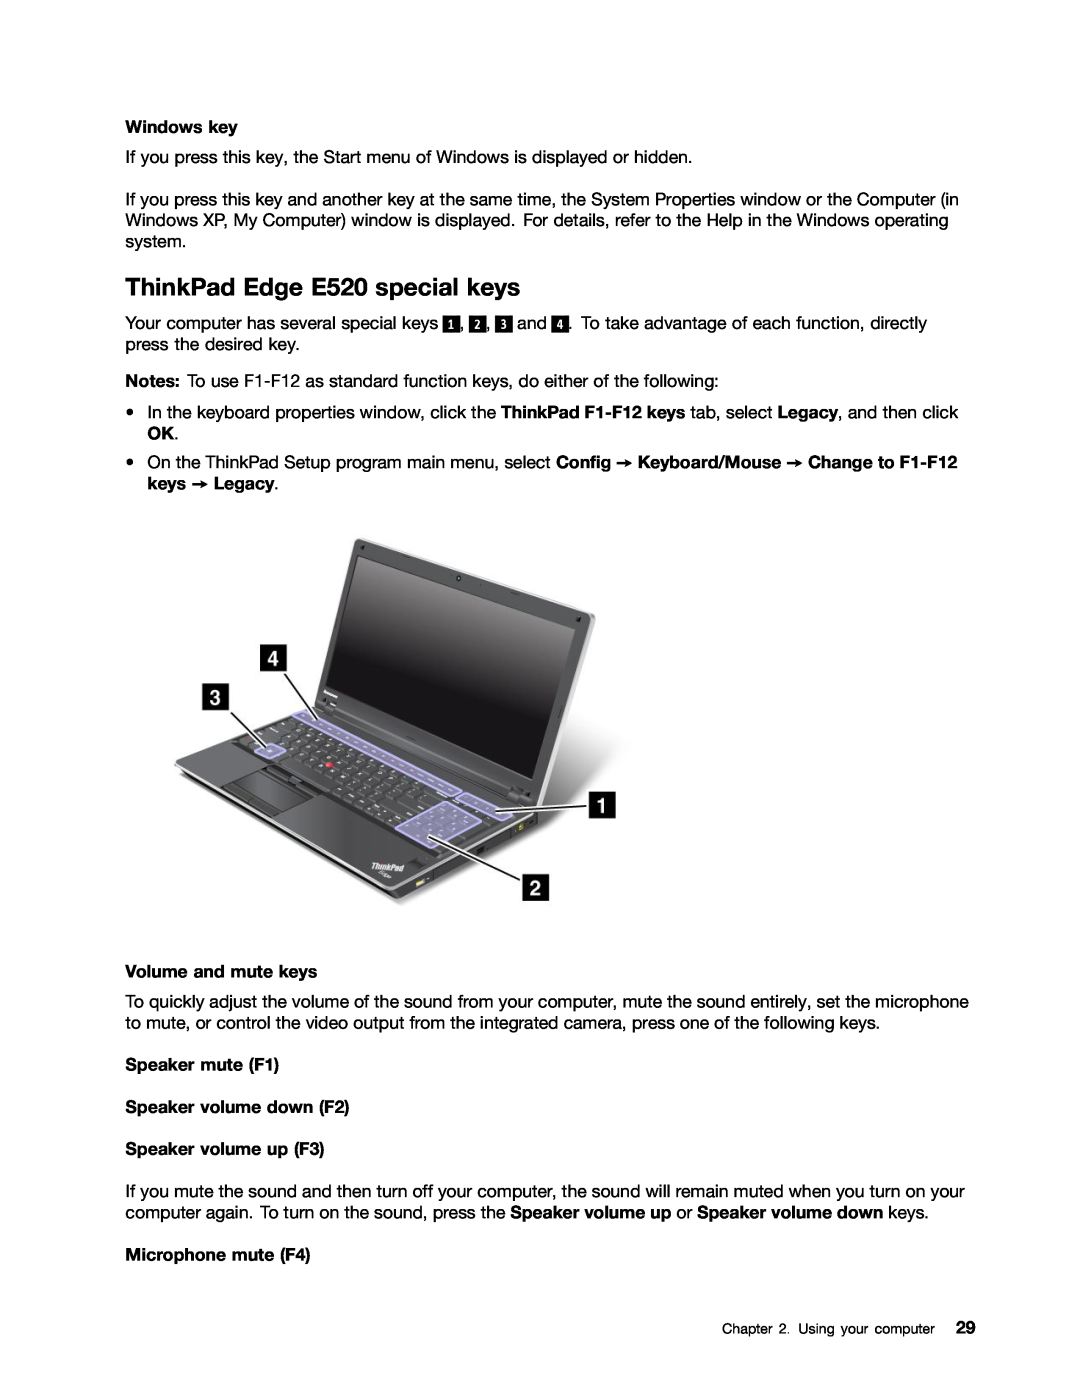 Lenovo 114155U, E420 manual ThinkPad Edge E520 special keys, Windows key, Volume and mute keys, Microphone mute F4 